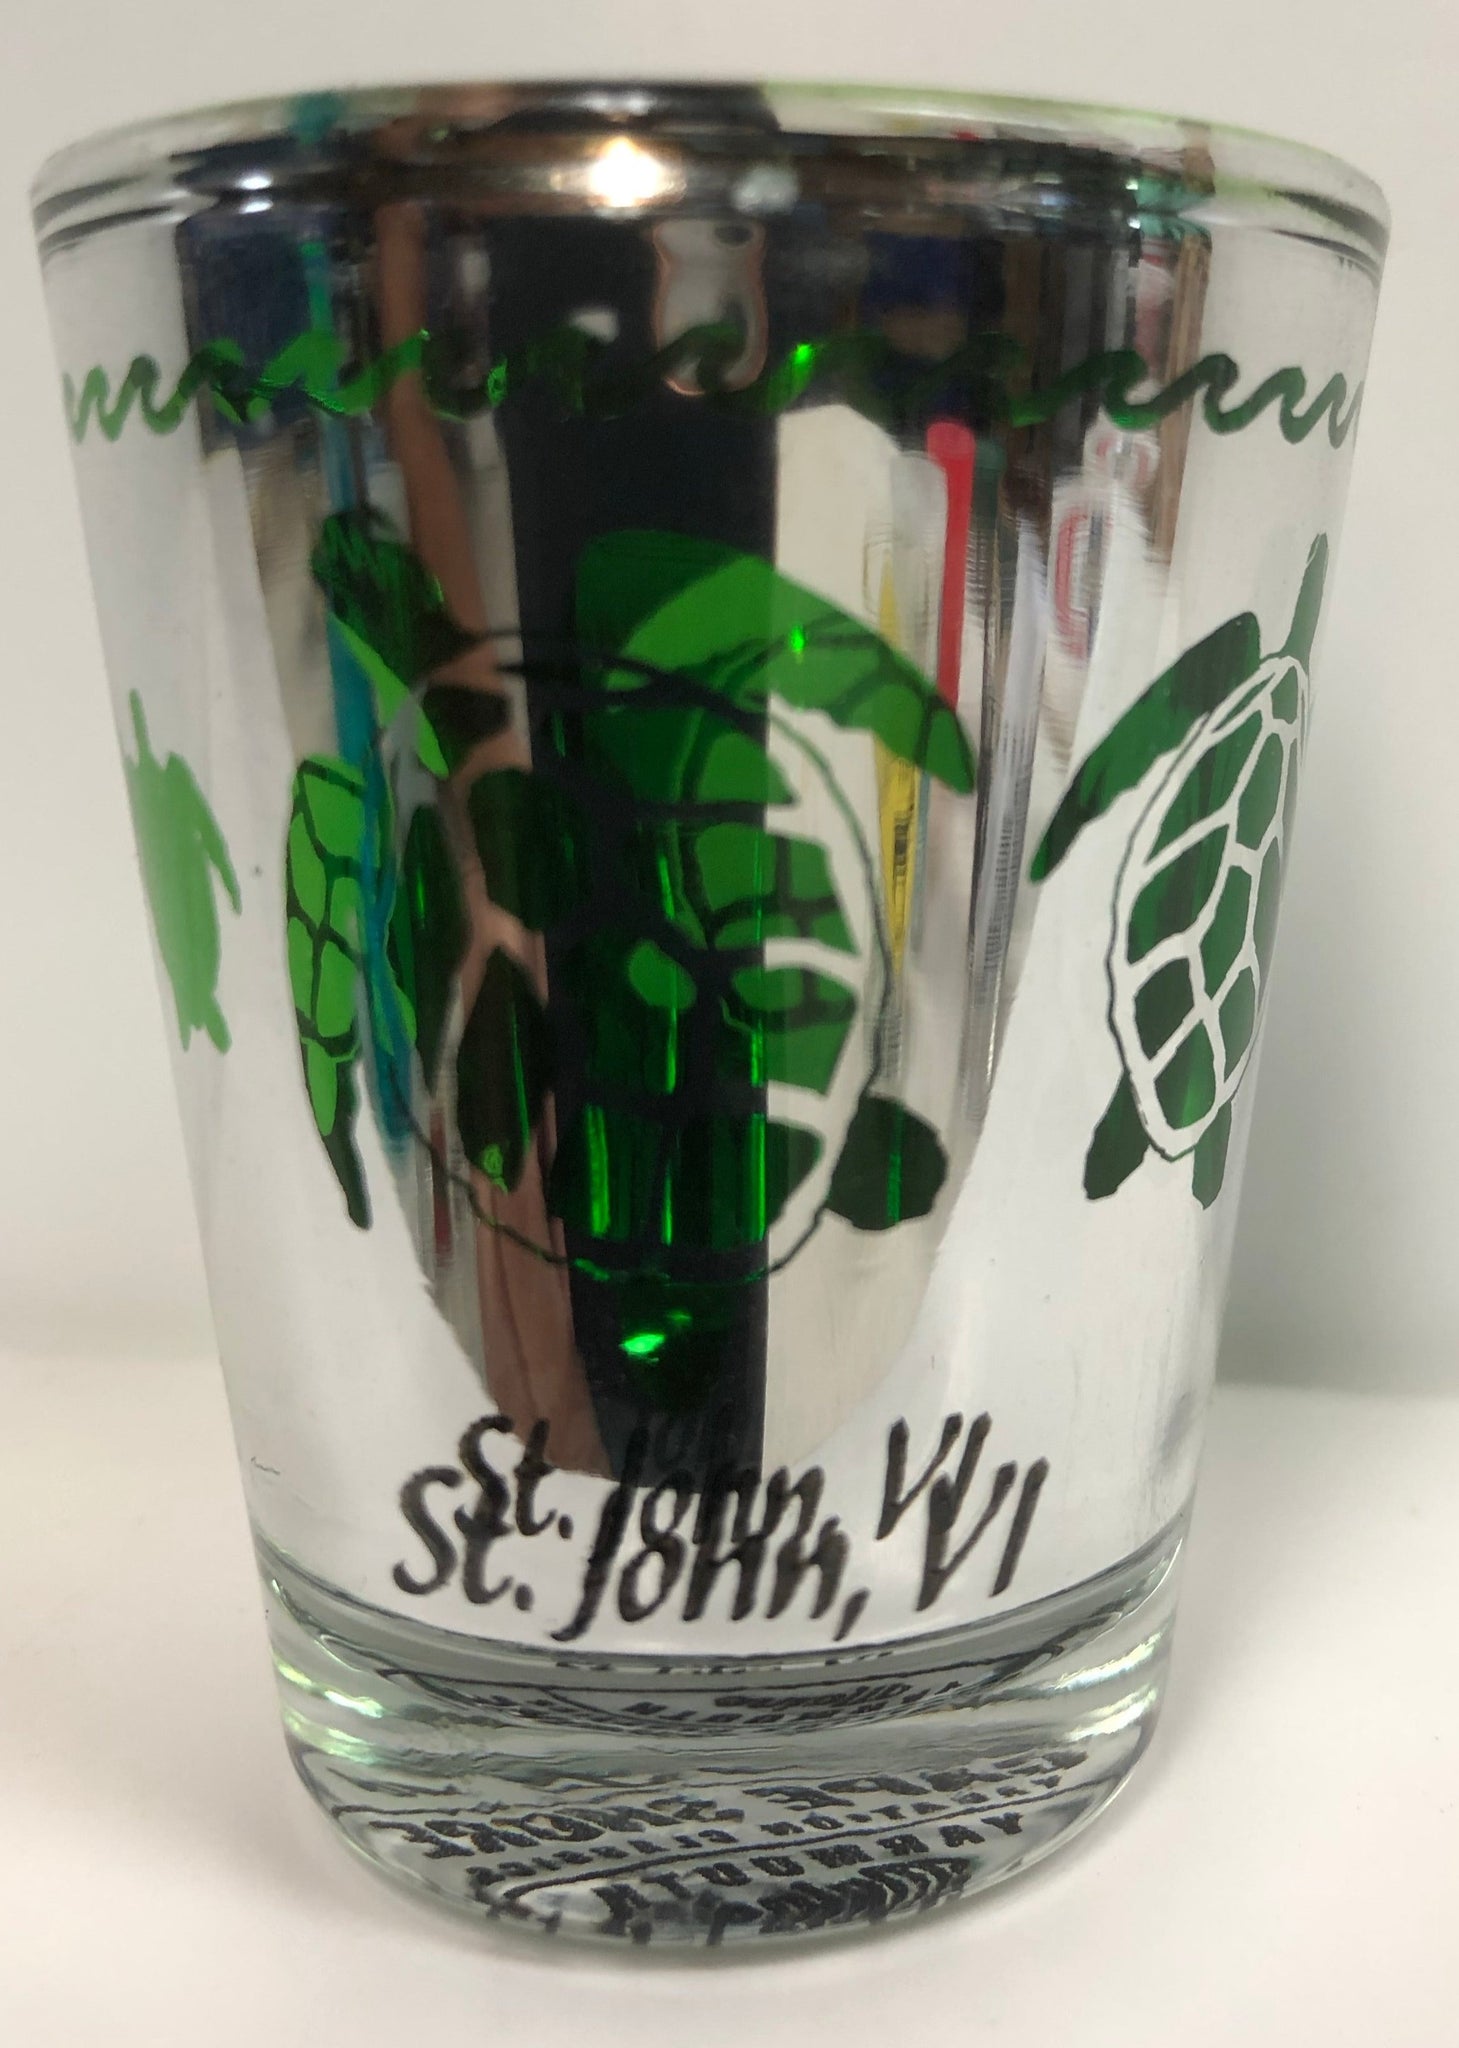 Electro Green Turtle St. John, VI Shot Glass